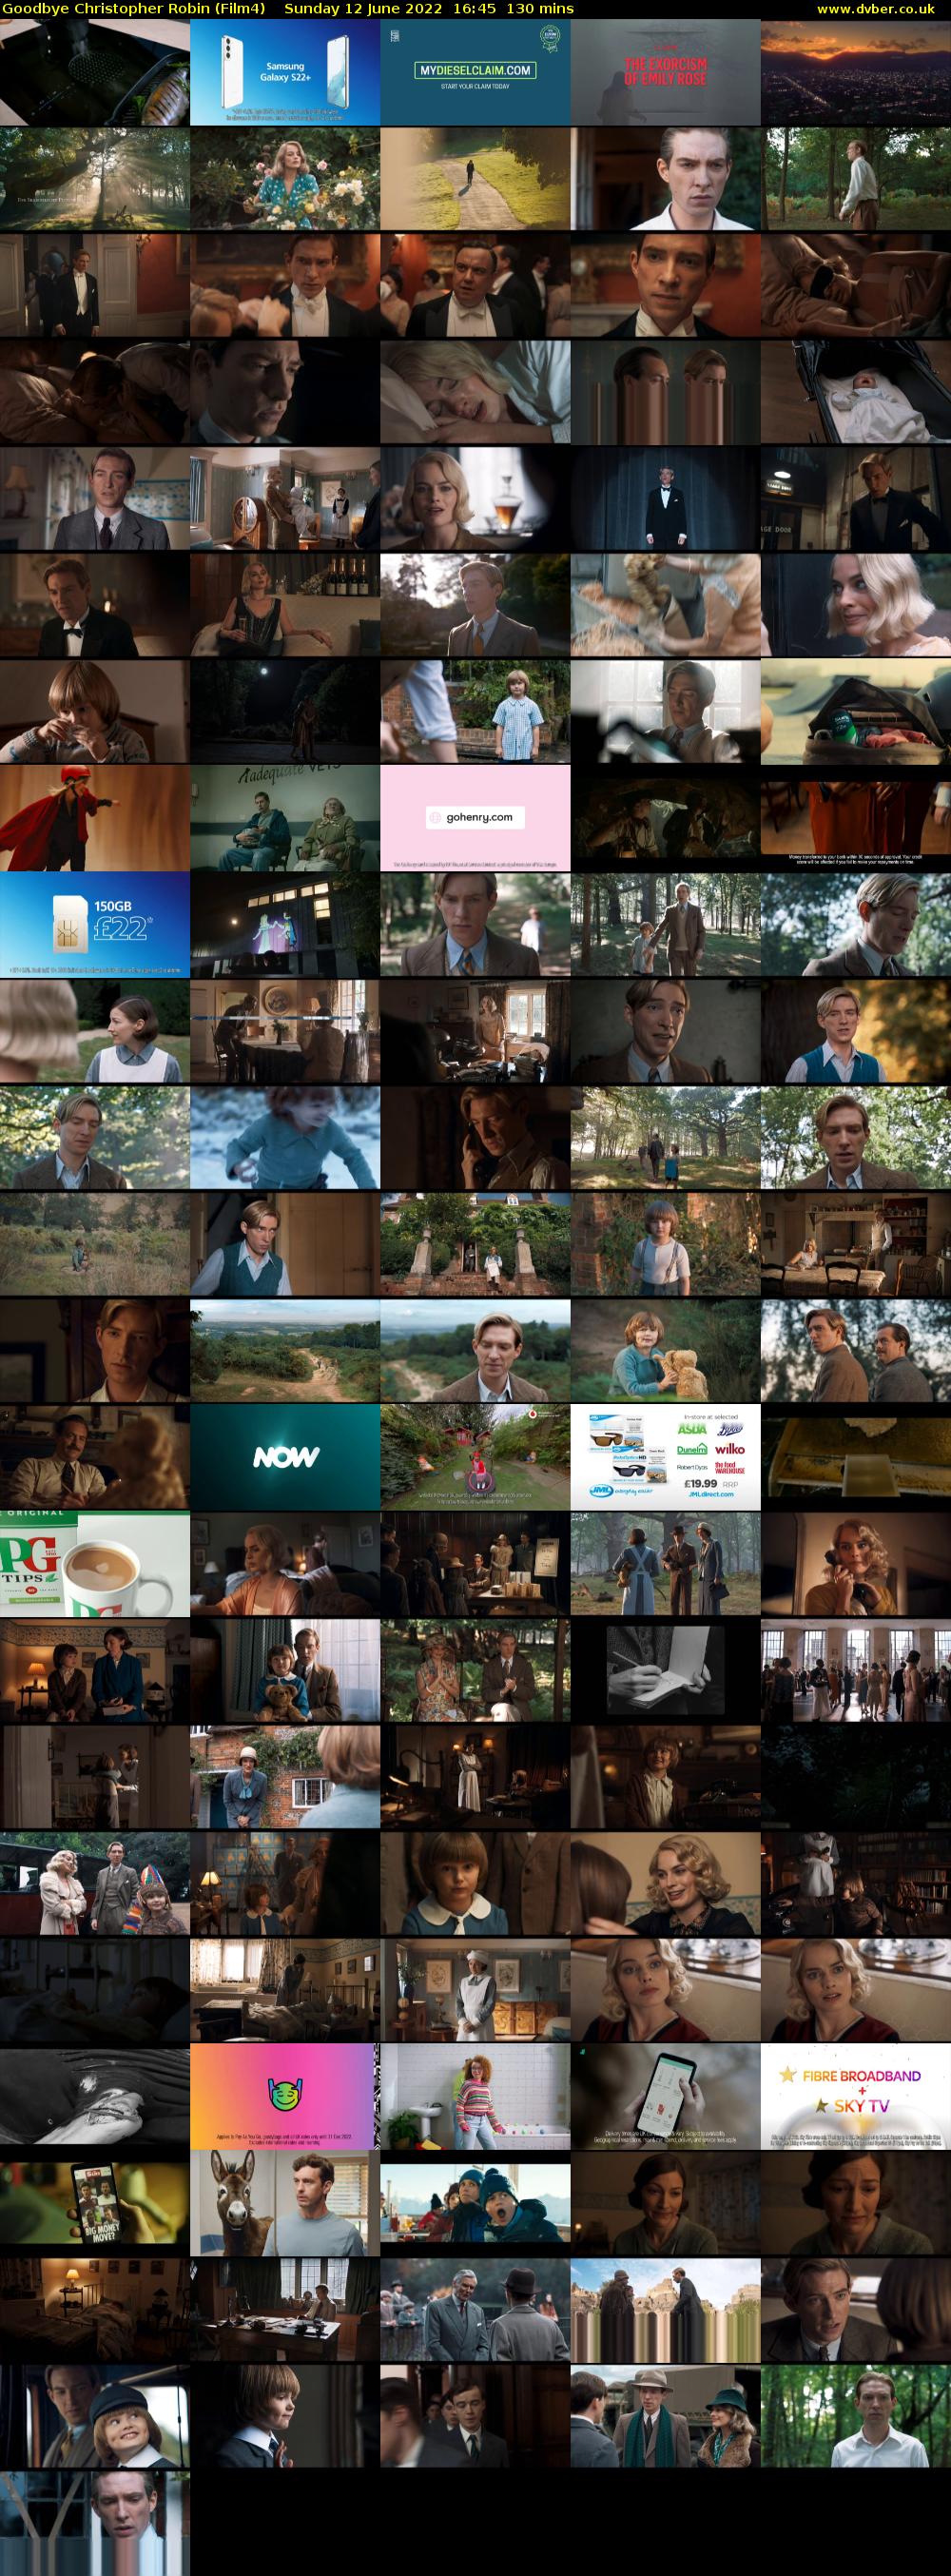 Goodbye Christopher Robin (Film4) Sunday 12 June 2022 16:45 - 18:55